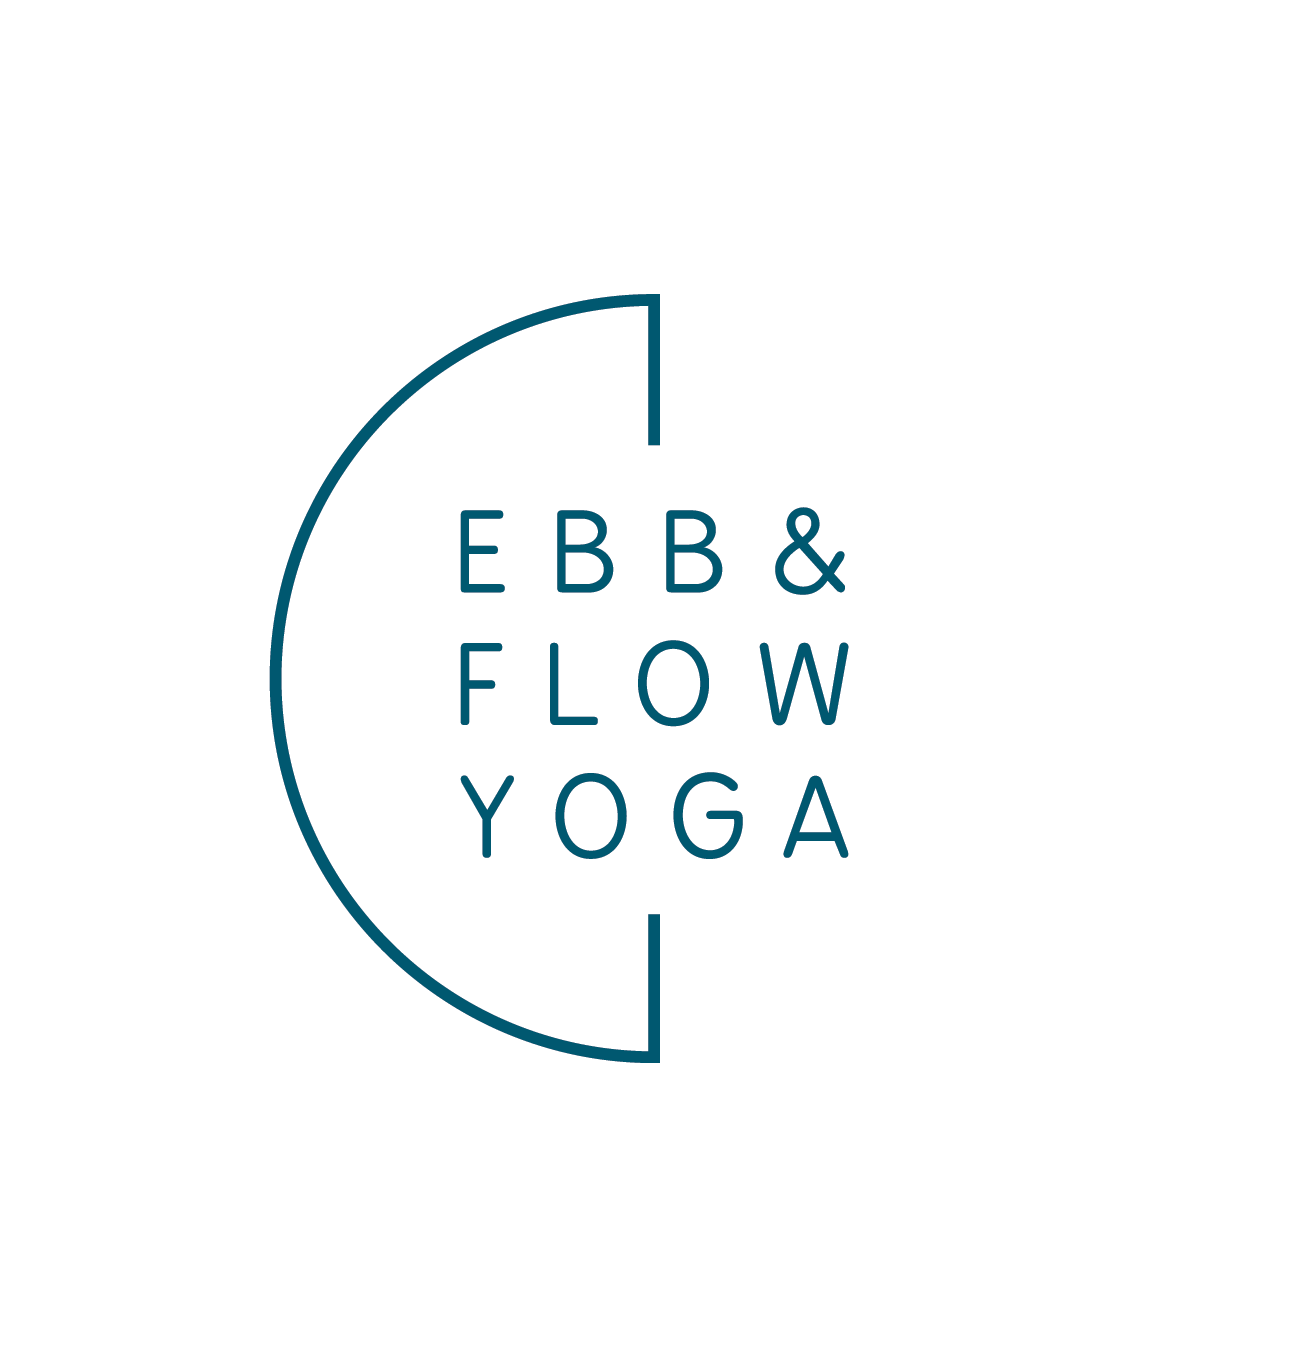 Ebb & Flow Yoga